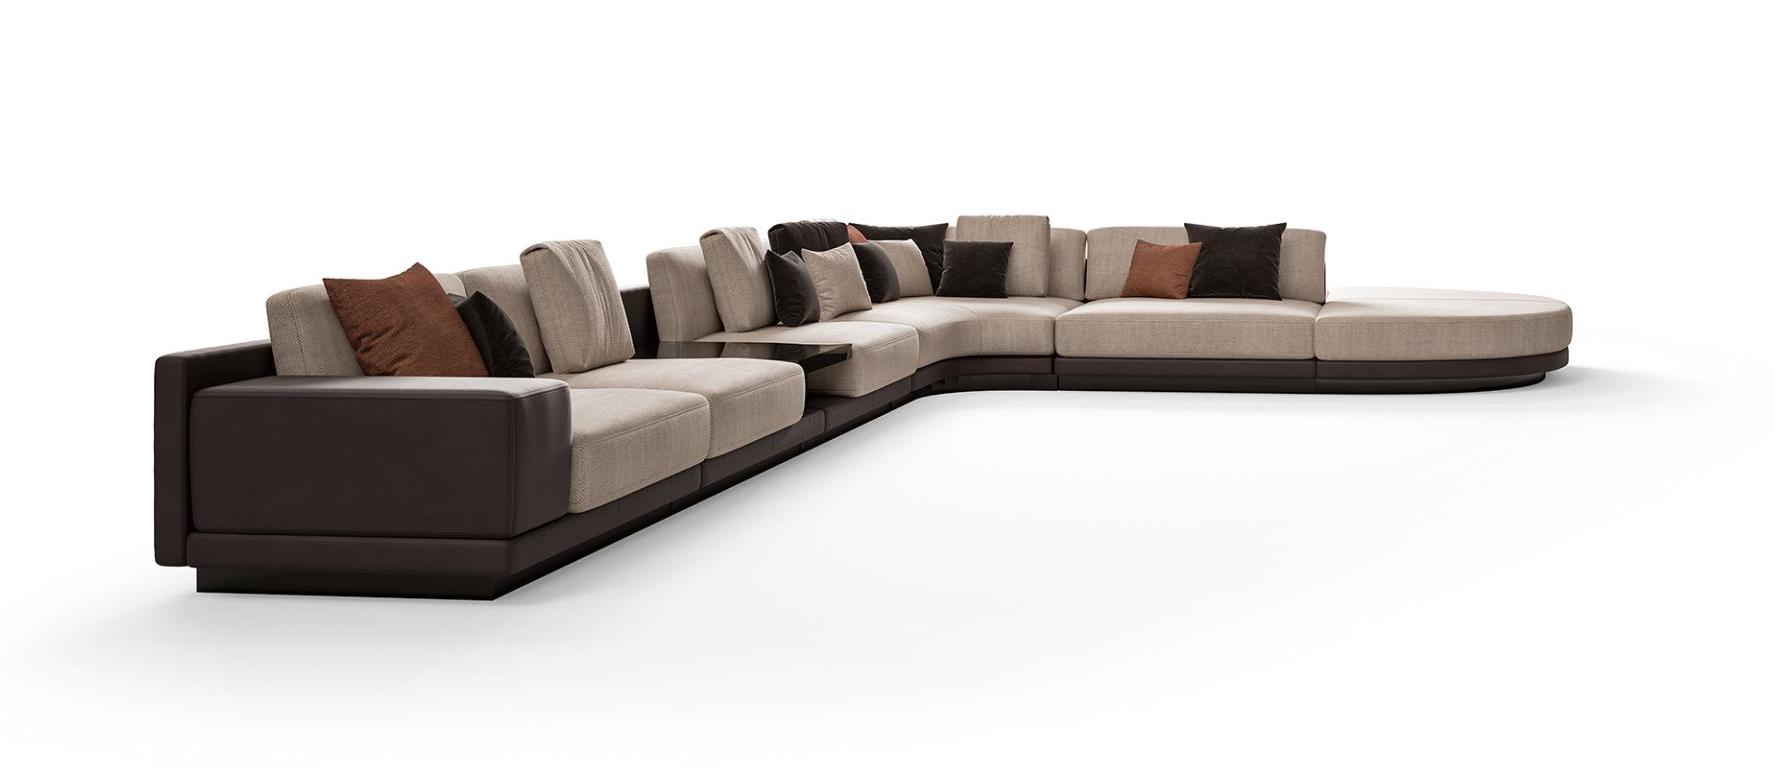 Contemporary Chic Italian Leather Sofa